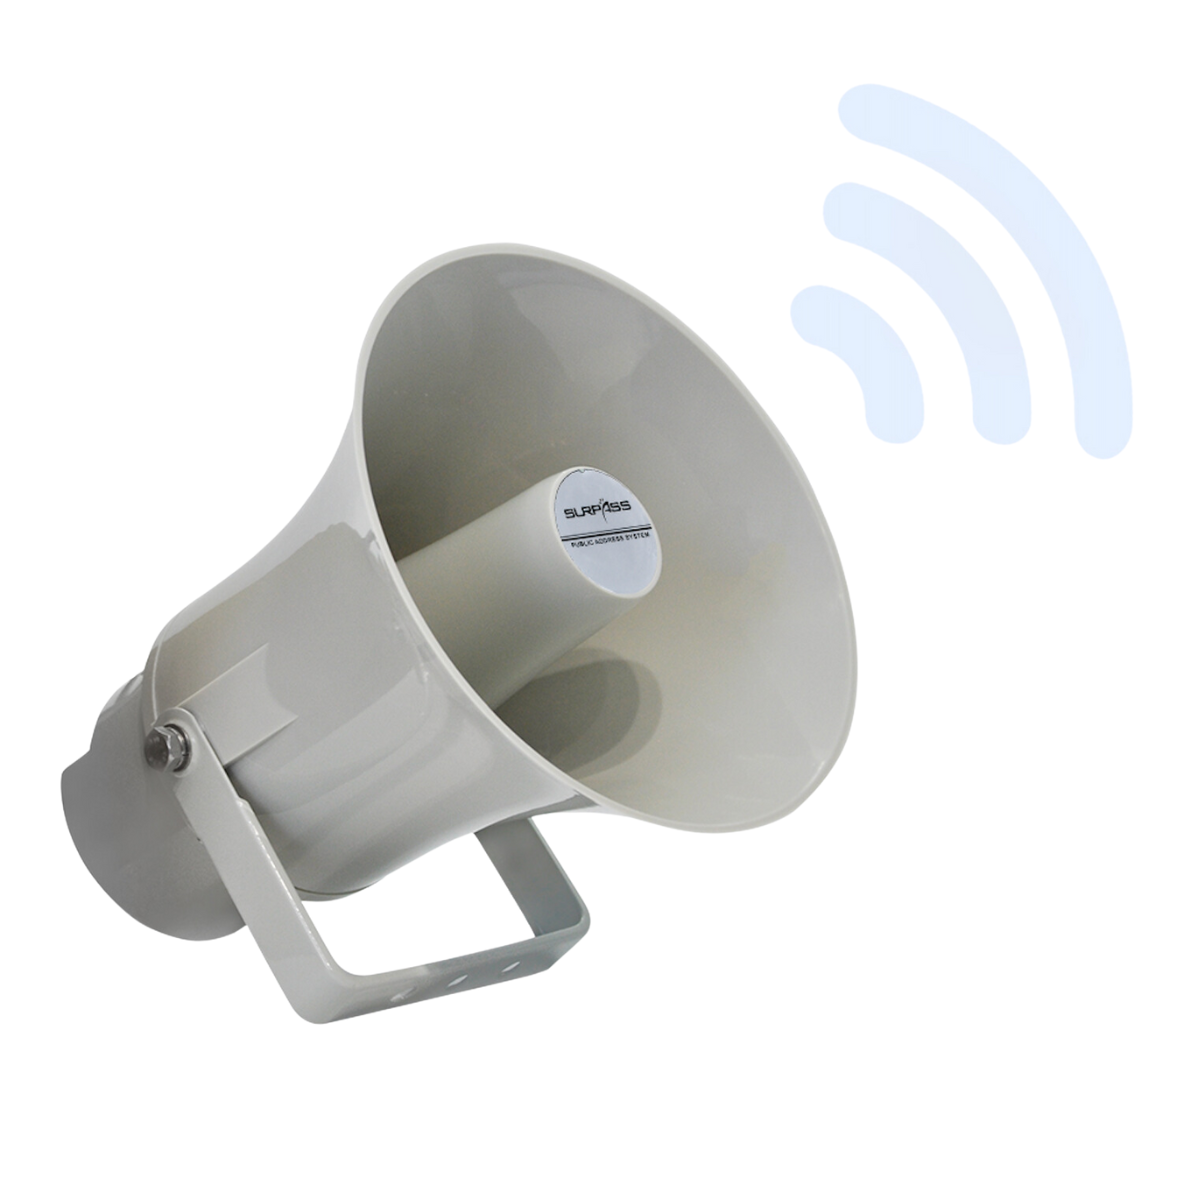 Horn speaker 30W outdoor PA system waterproof IP66